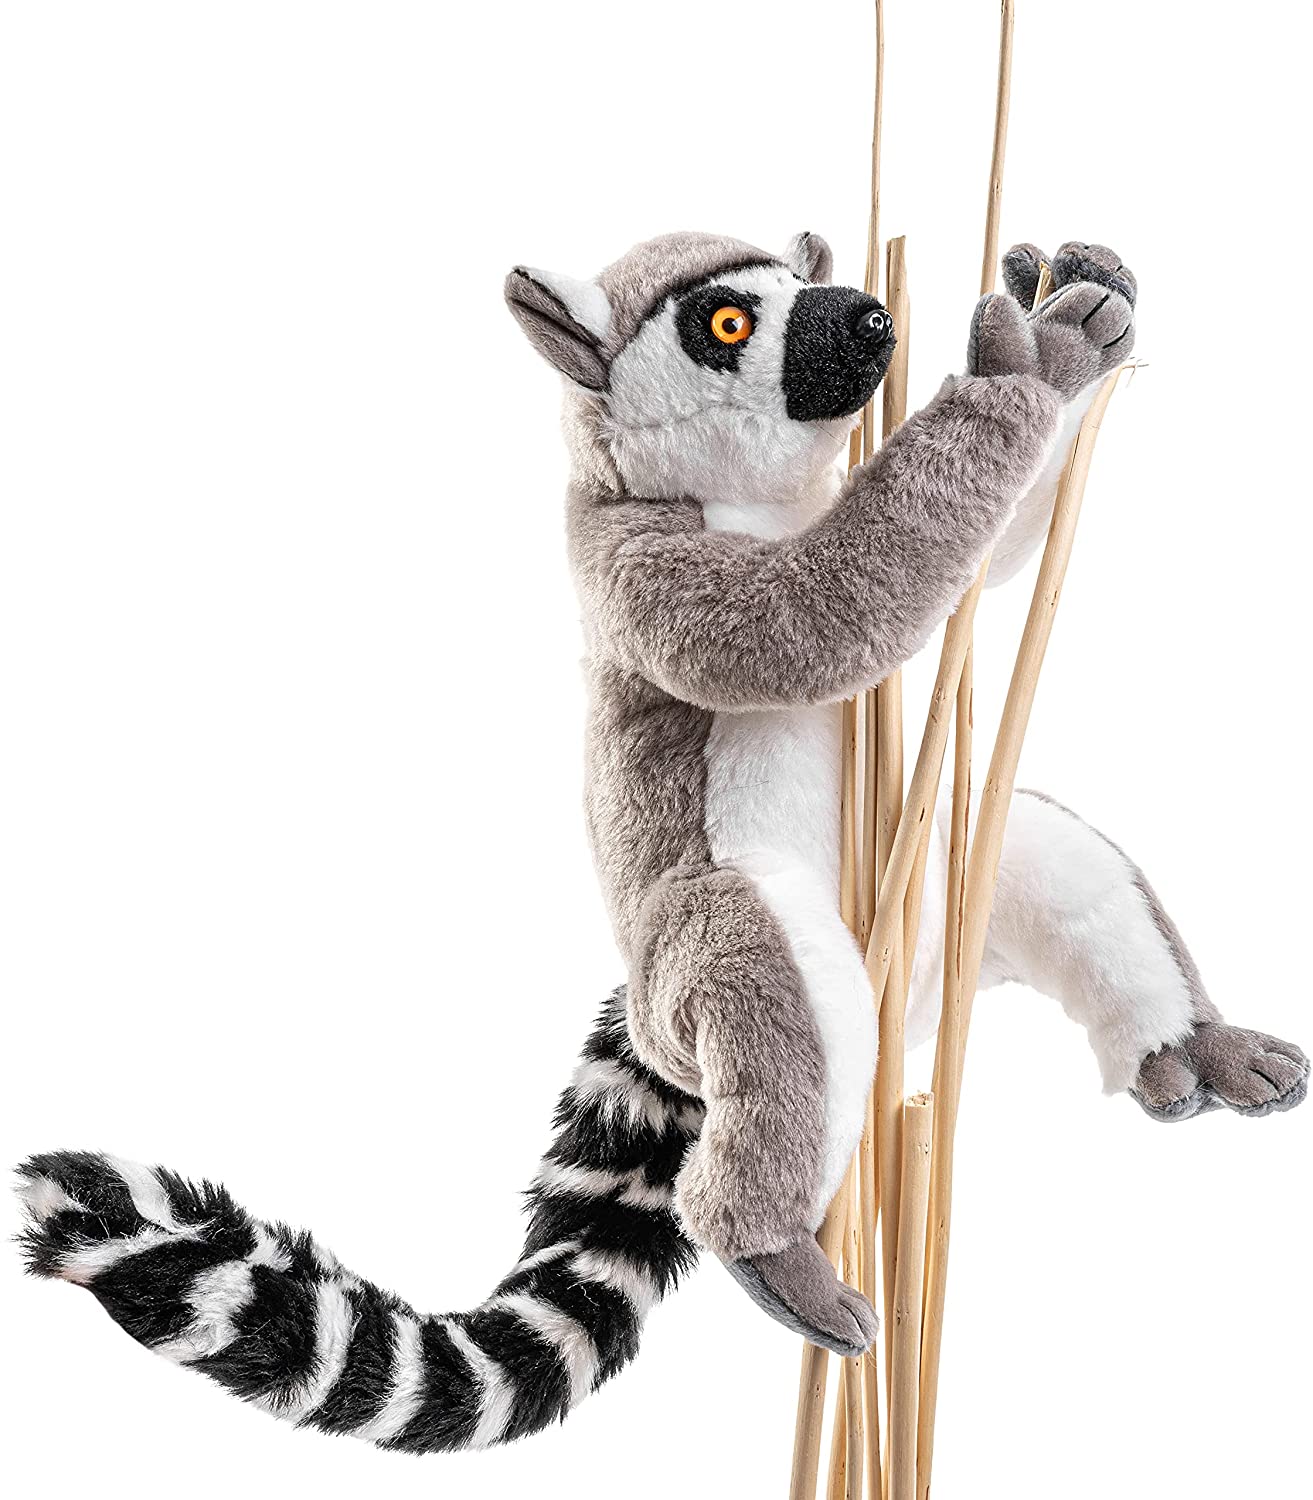 Katta-Lemur mit Klettverschluss an den Händen - 21 cm (Höhe) - Affe, Lemuren - Plüschtier, Kuscheltier